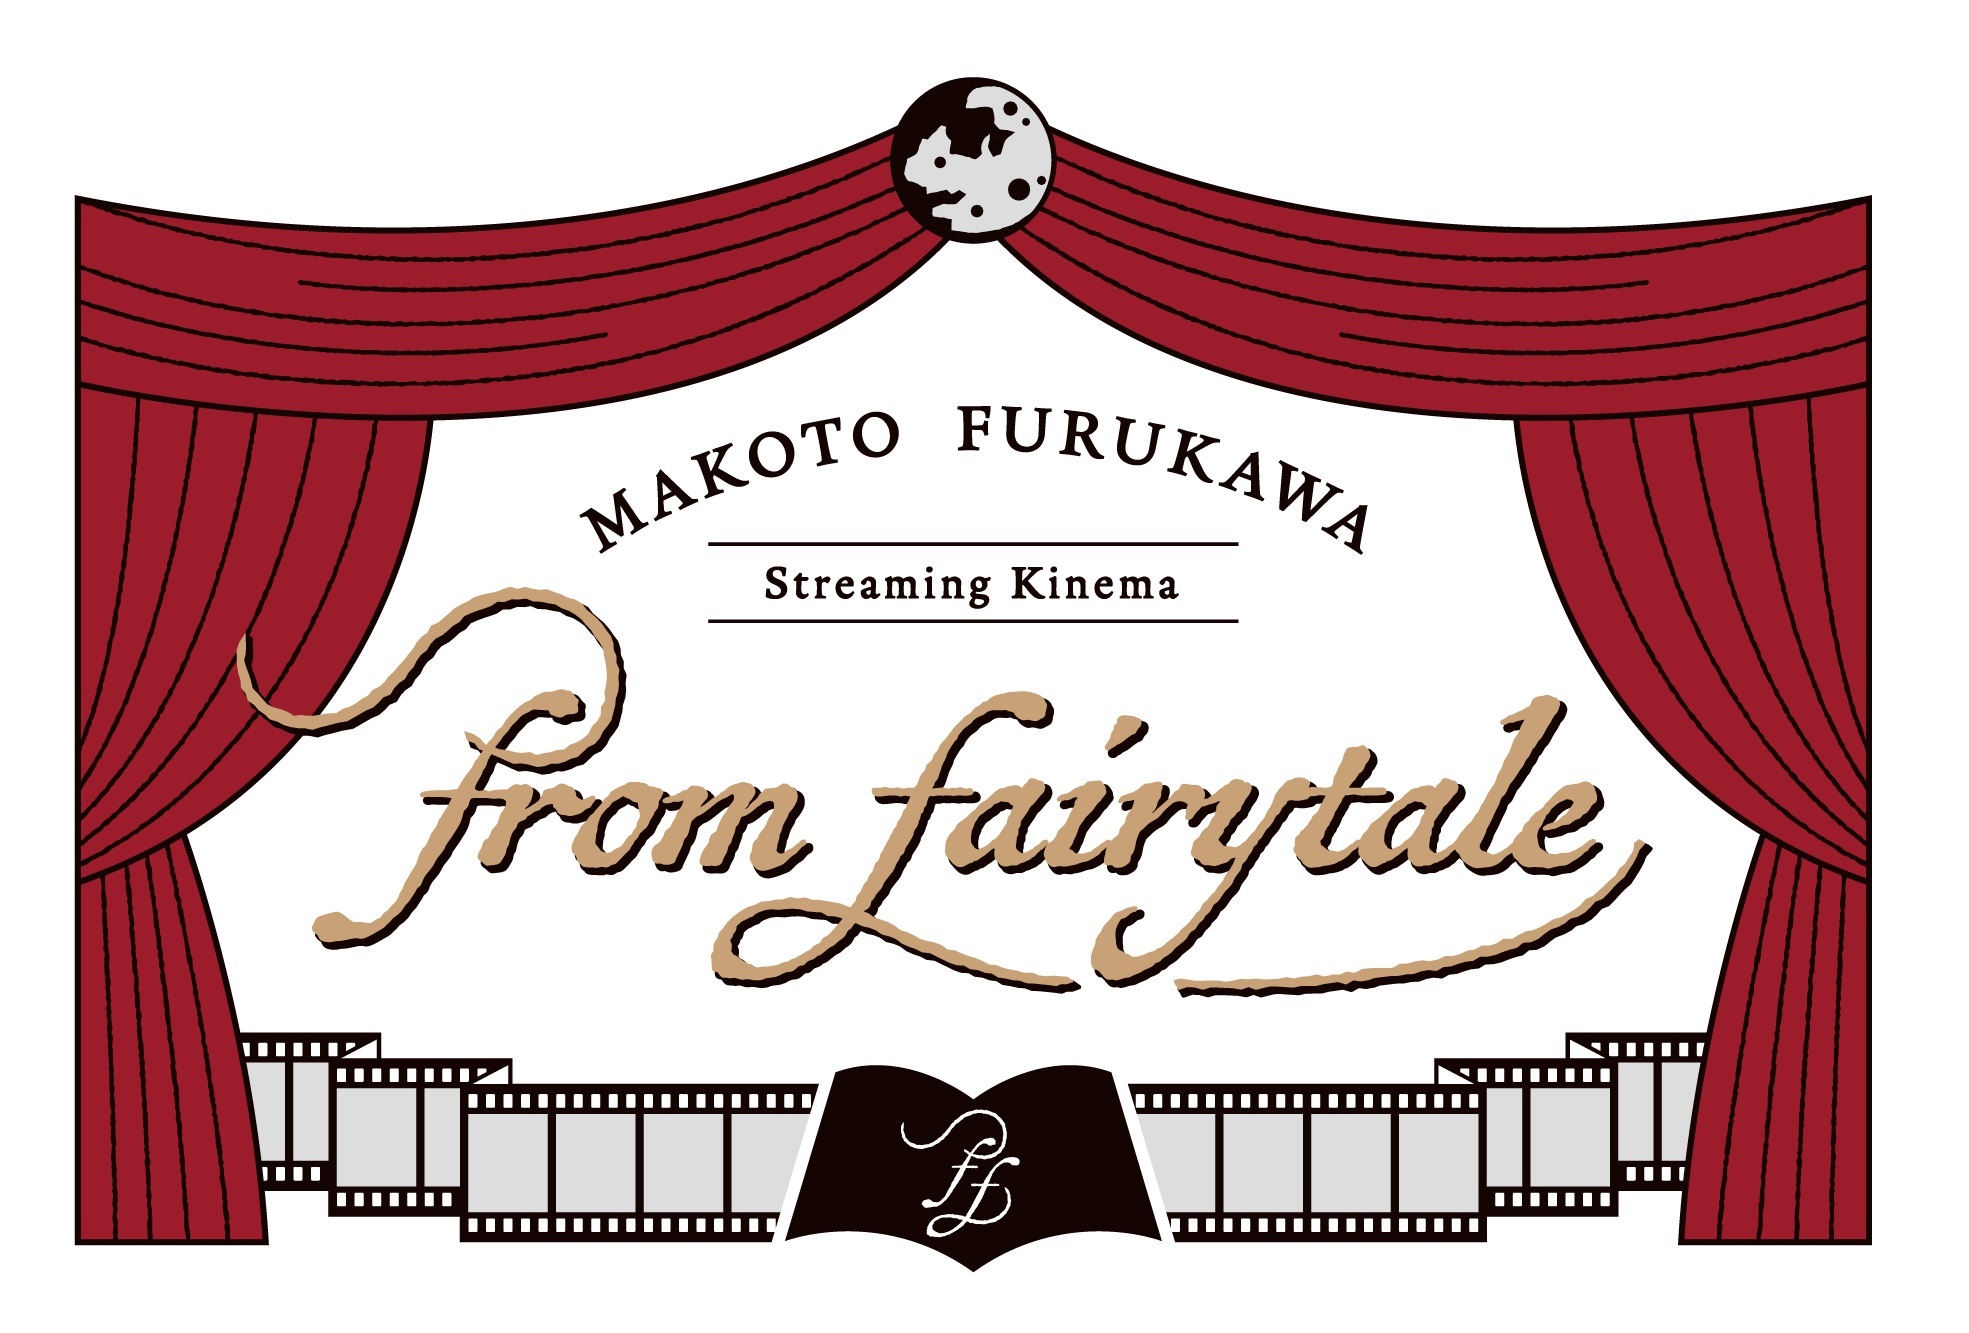 『MAKOTO FURUKAWA Streaming Kinema "from fairytale"』